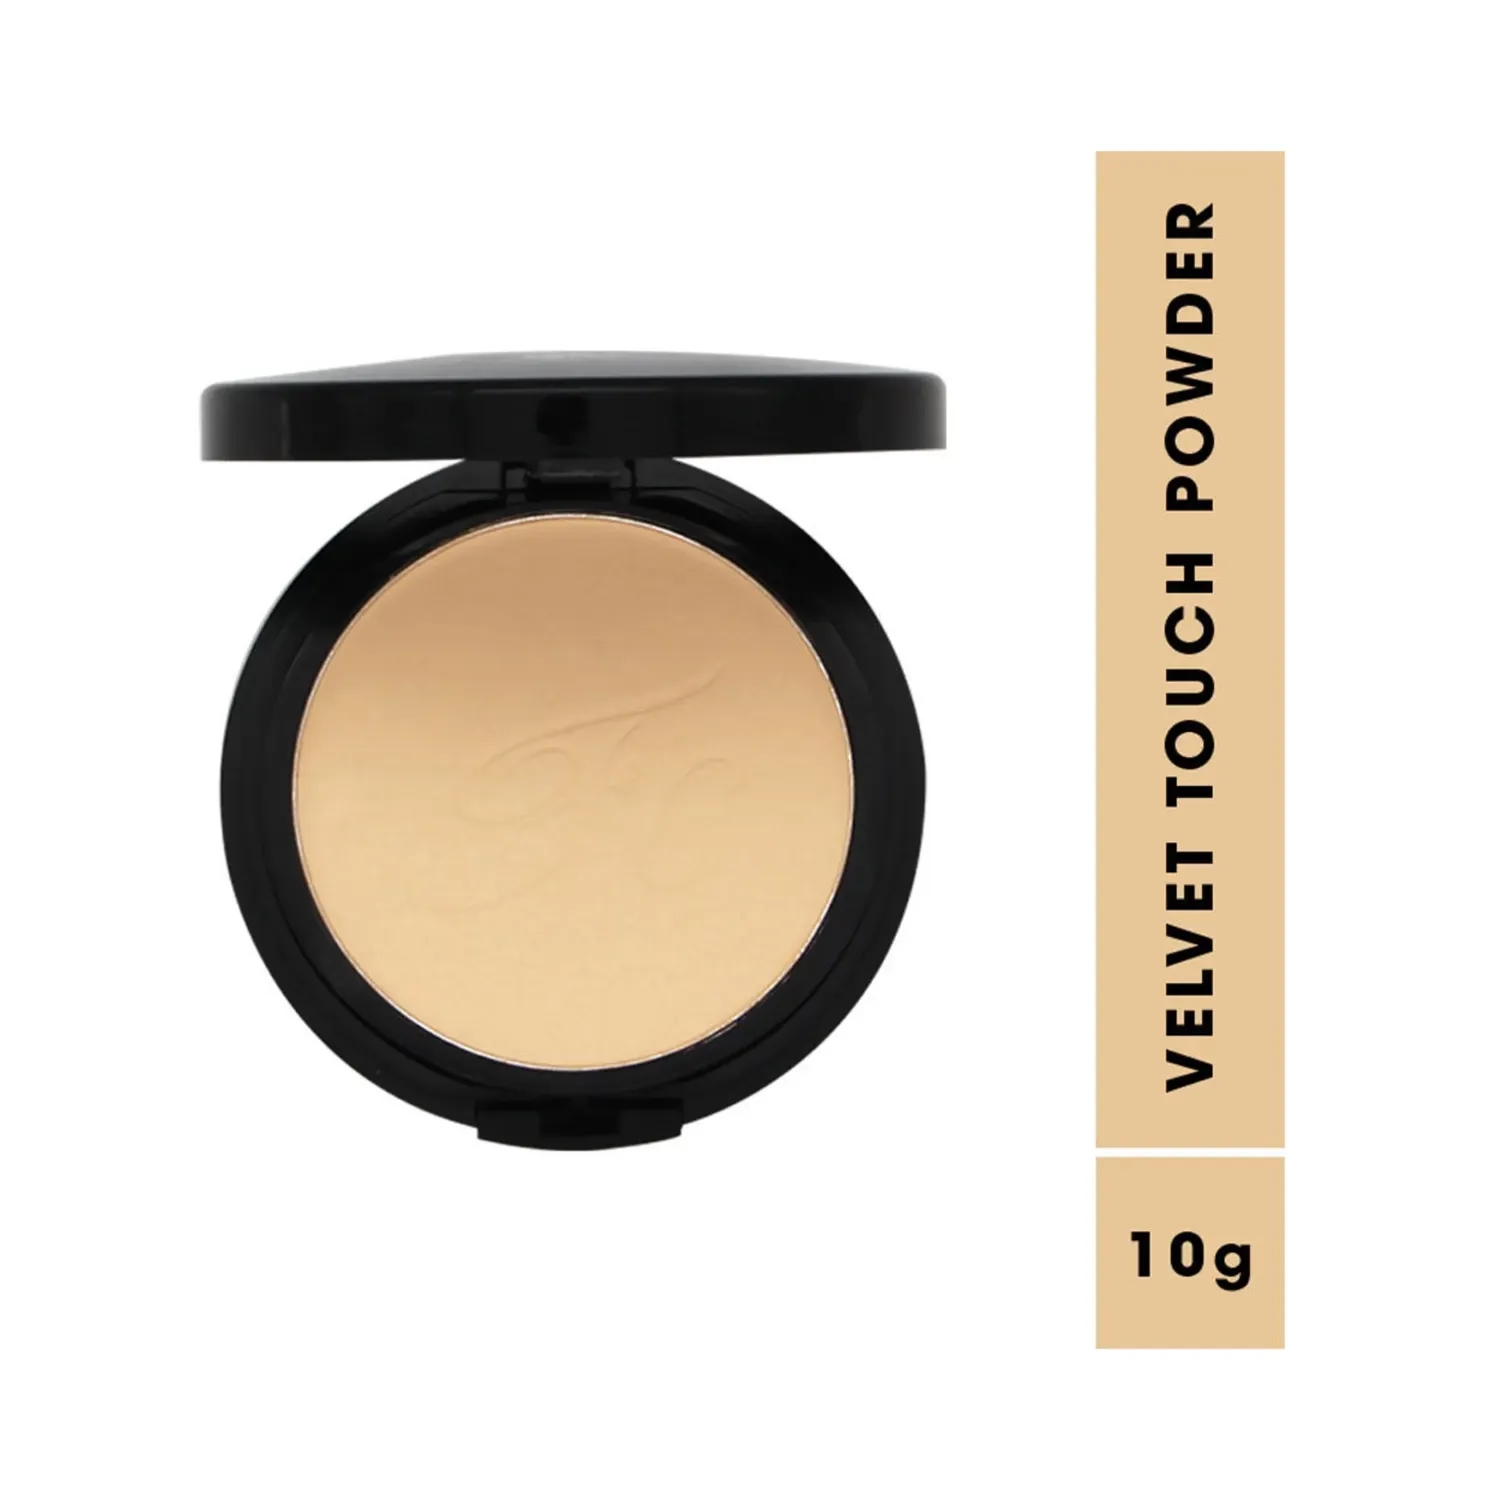 Fashion Colour Velvet Touch Compact Face Powder - 02 Shade (10g)